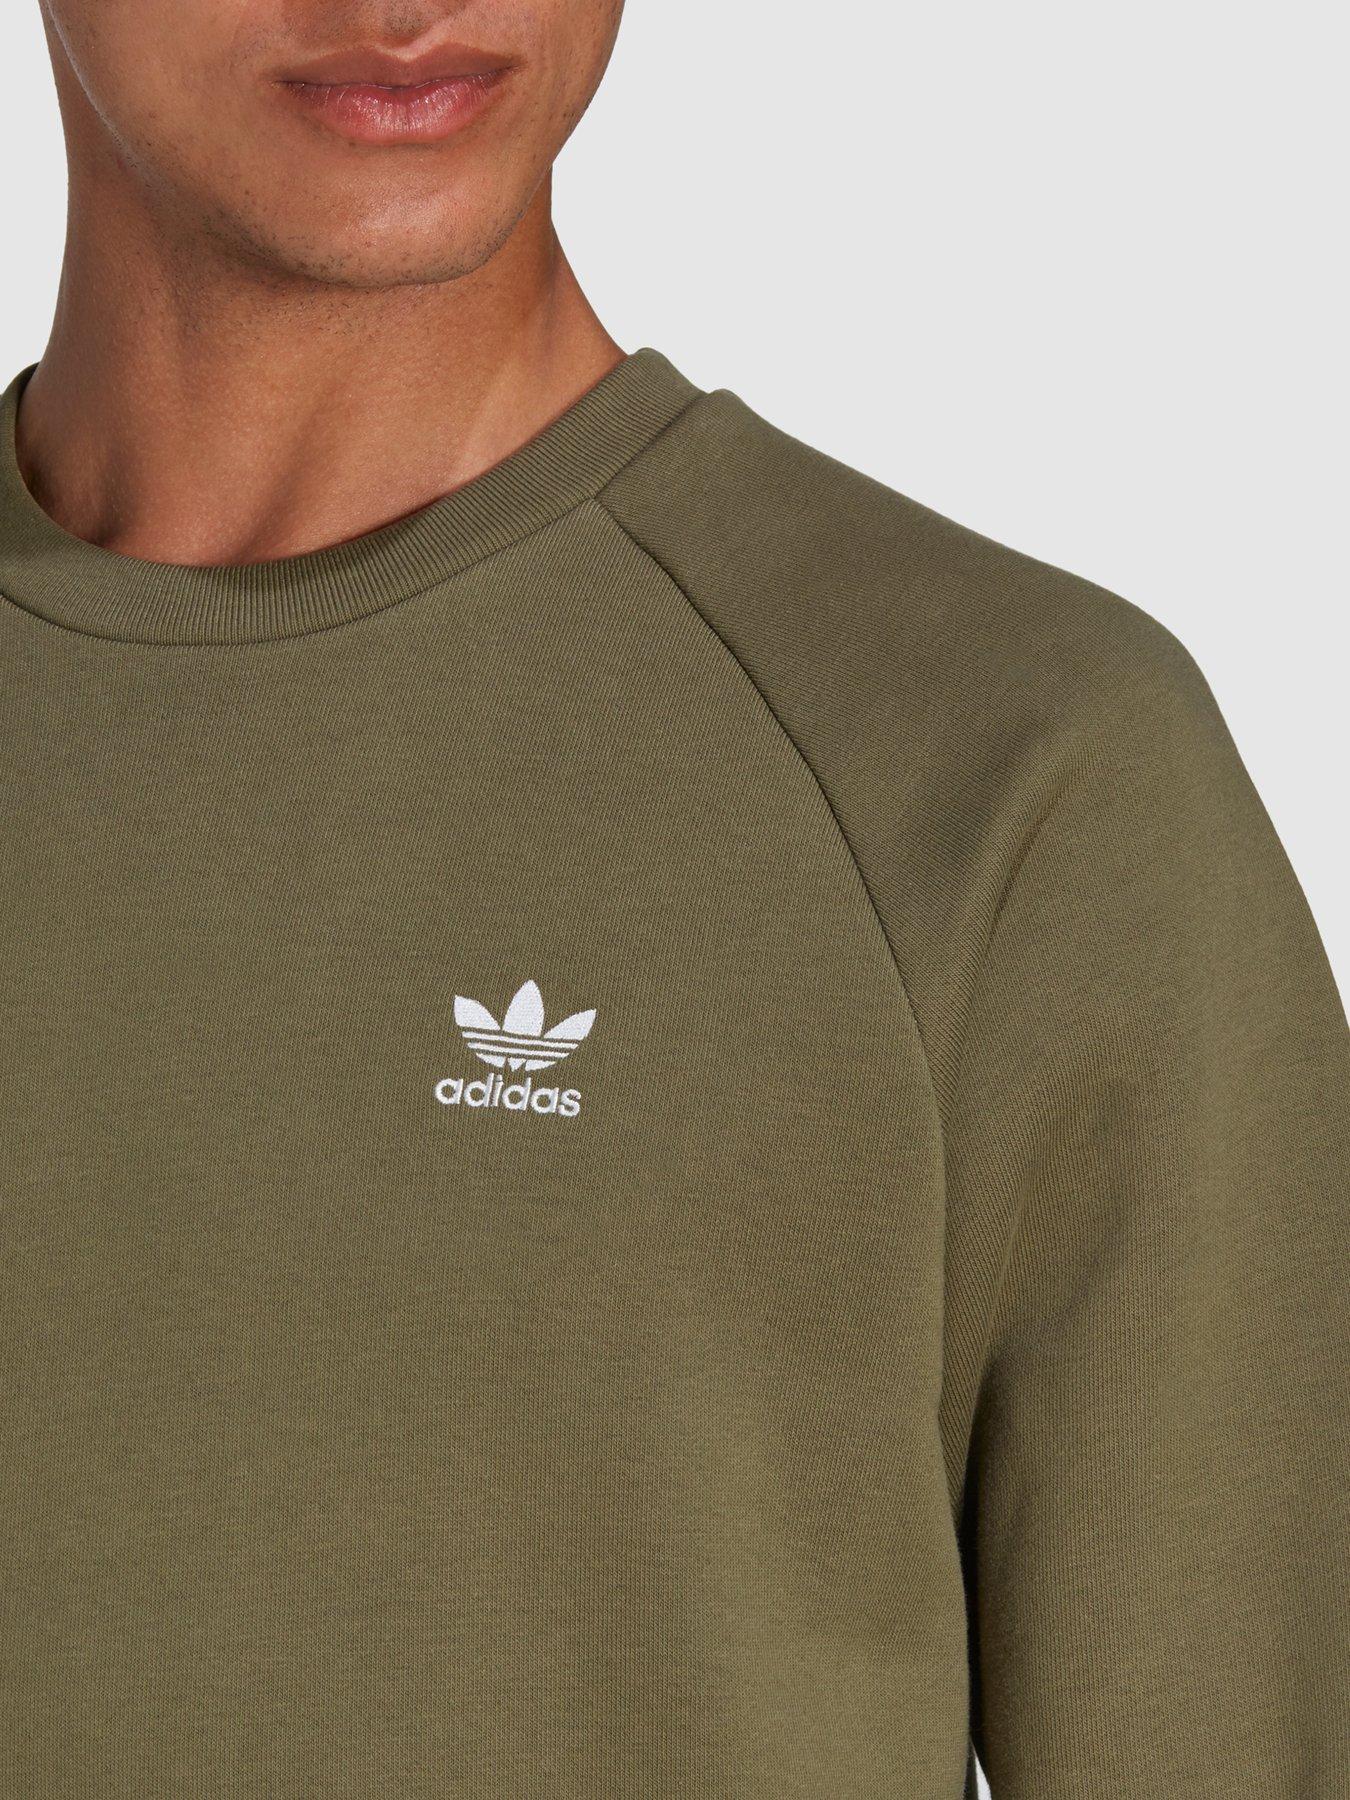 adidas Originals Essentials Crewneck Sweatshirt - Khaki | Very Ireland